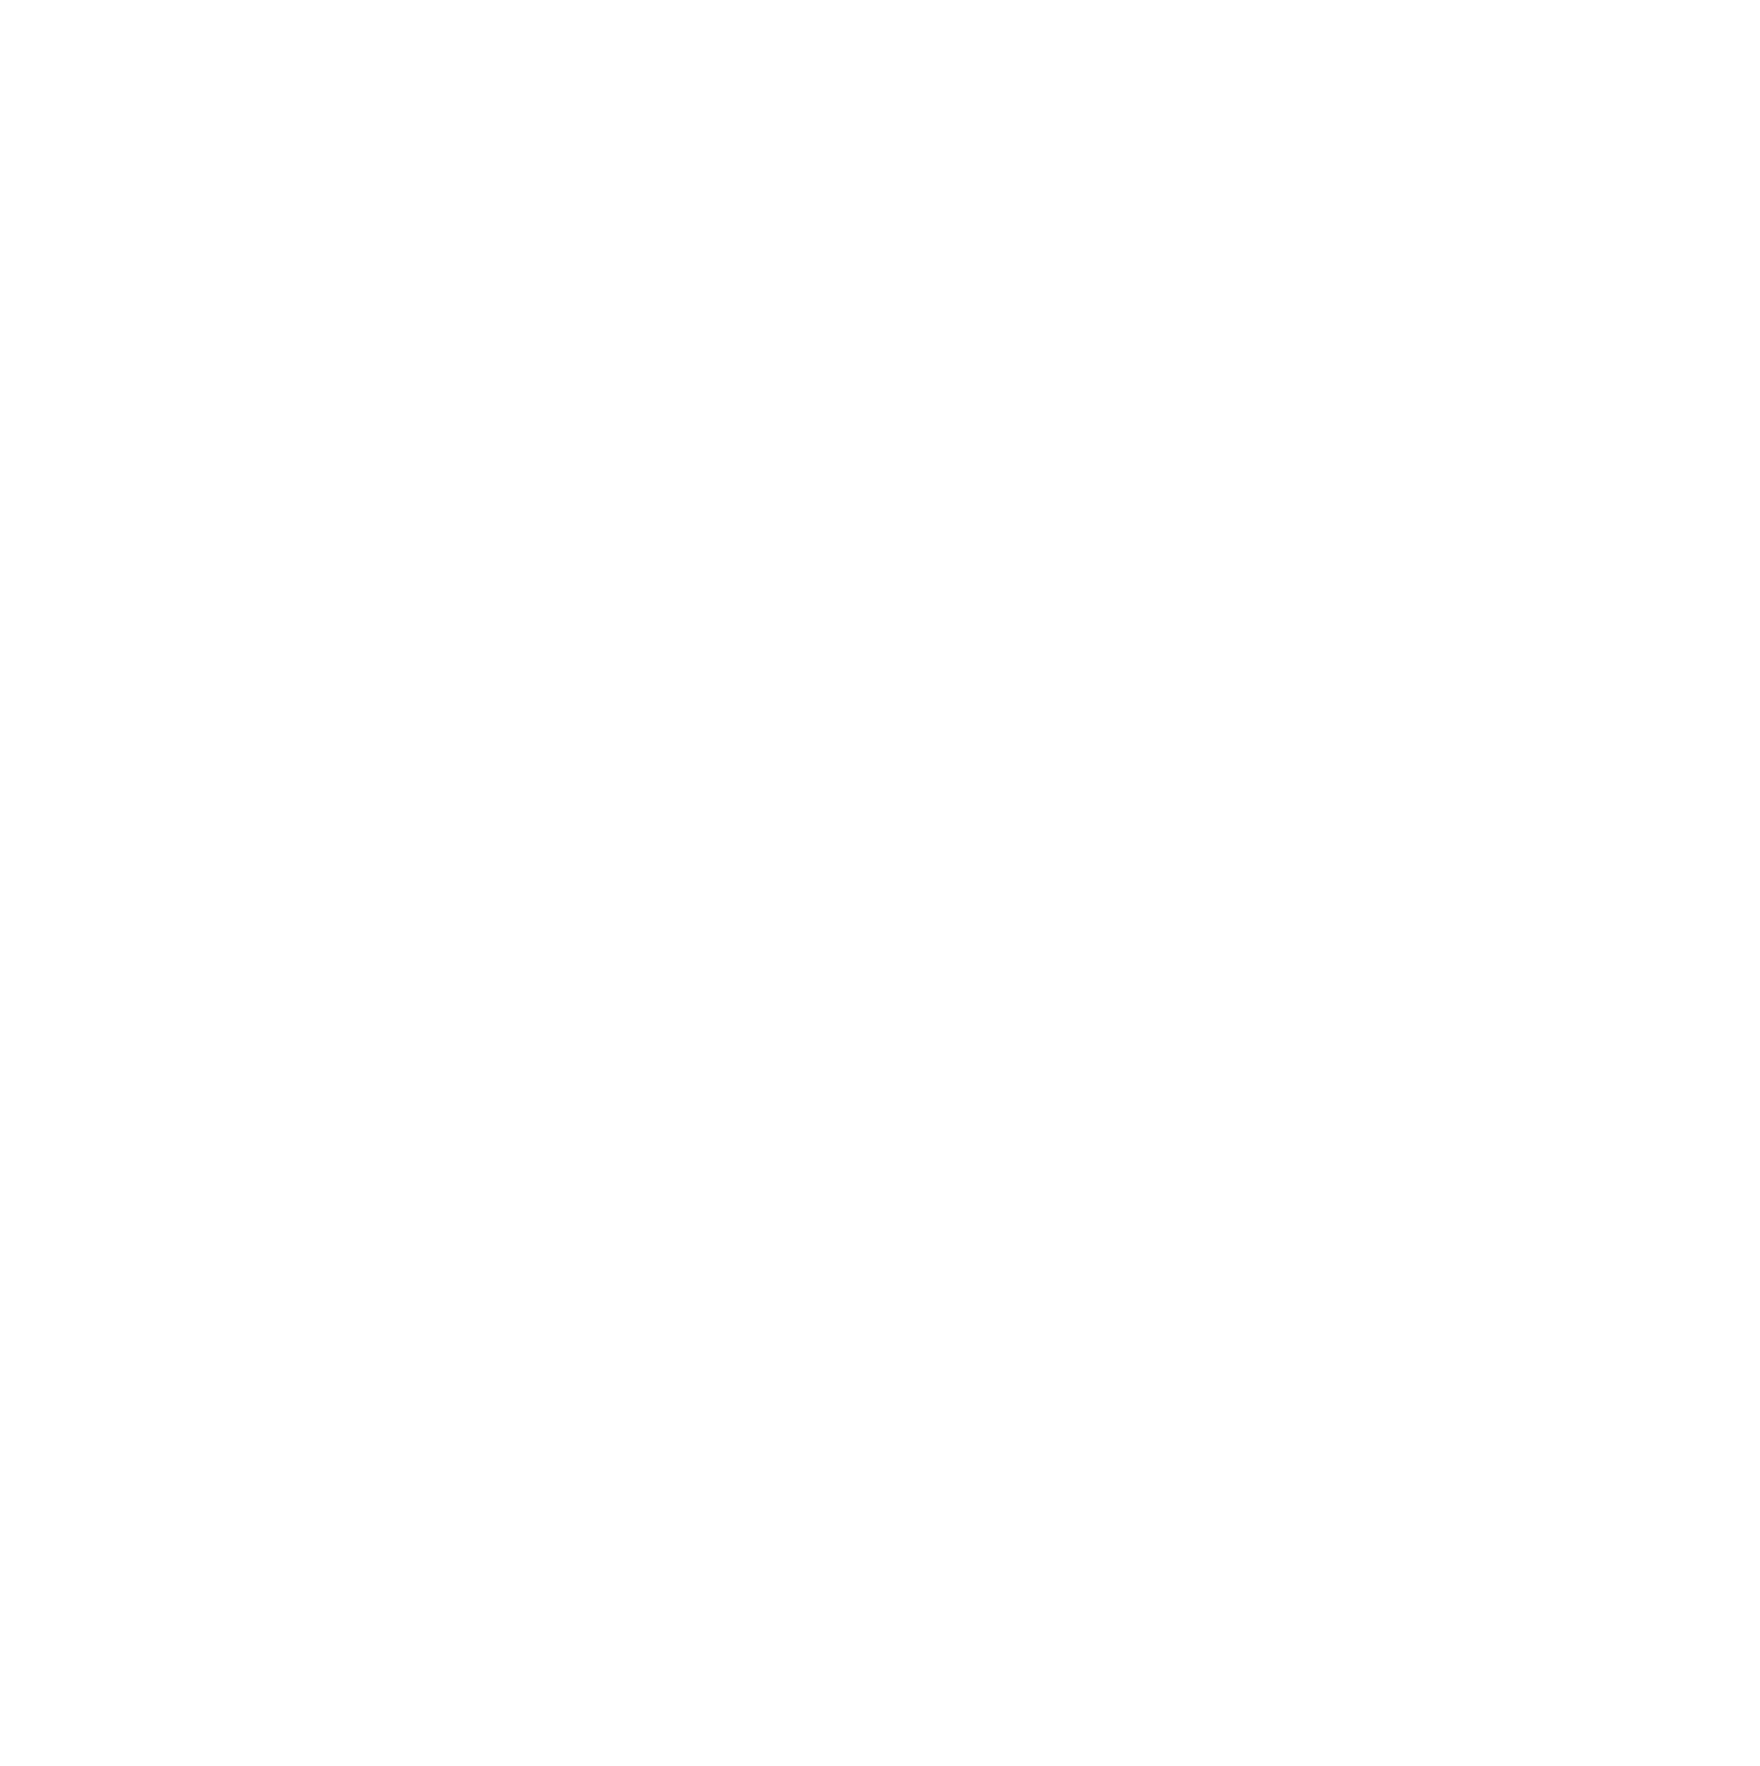 M&IT Awards 2020 